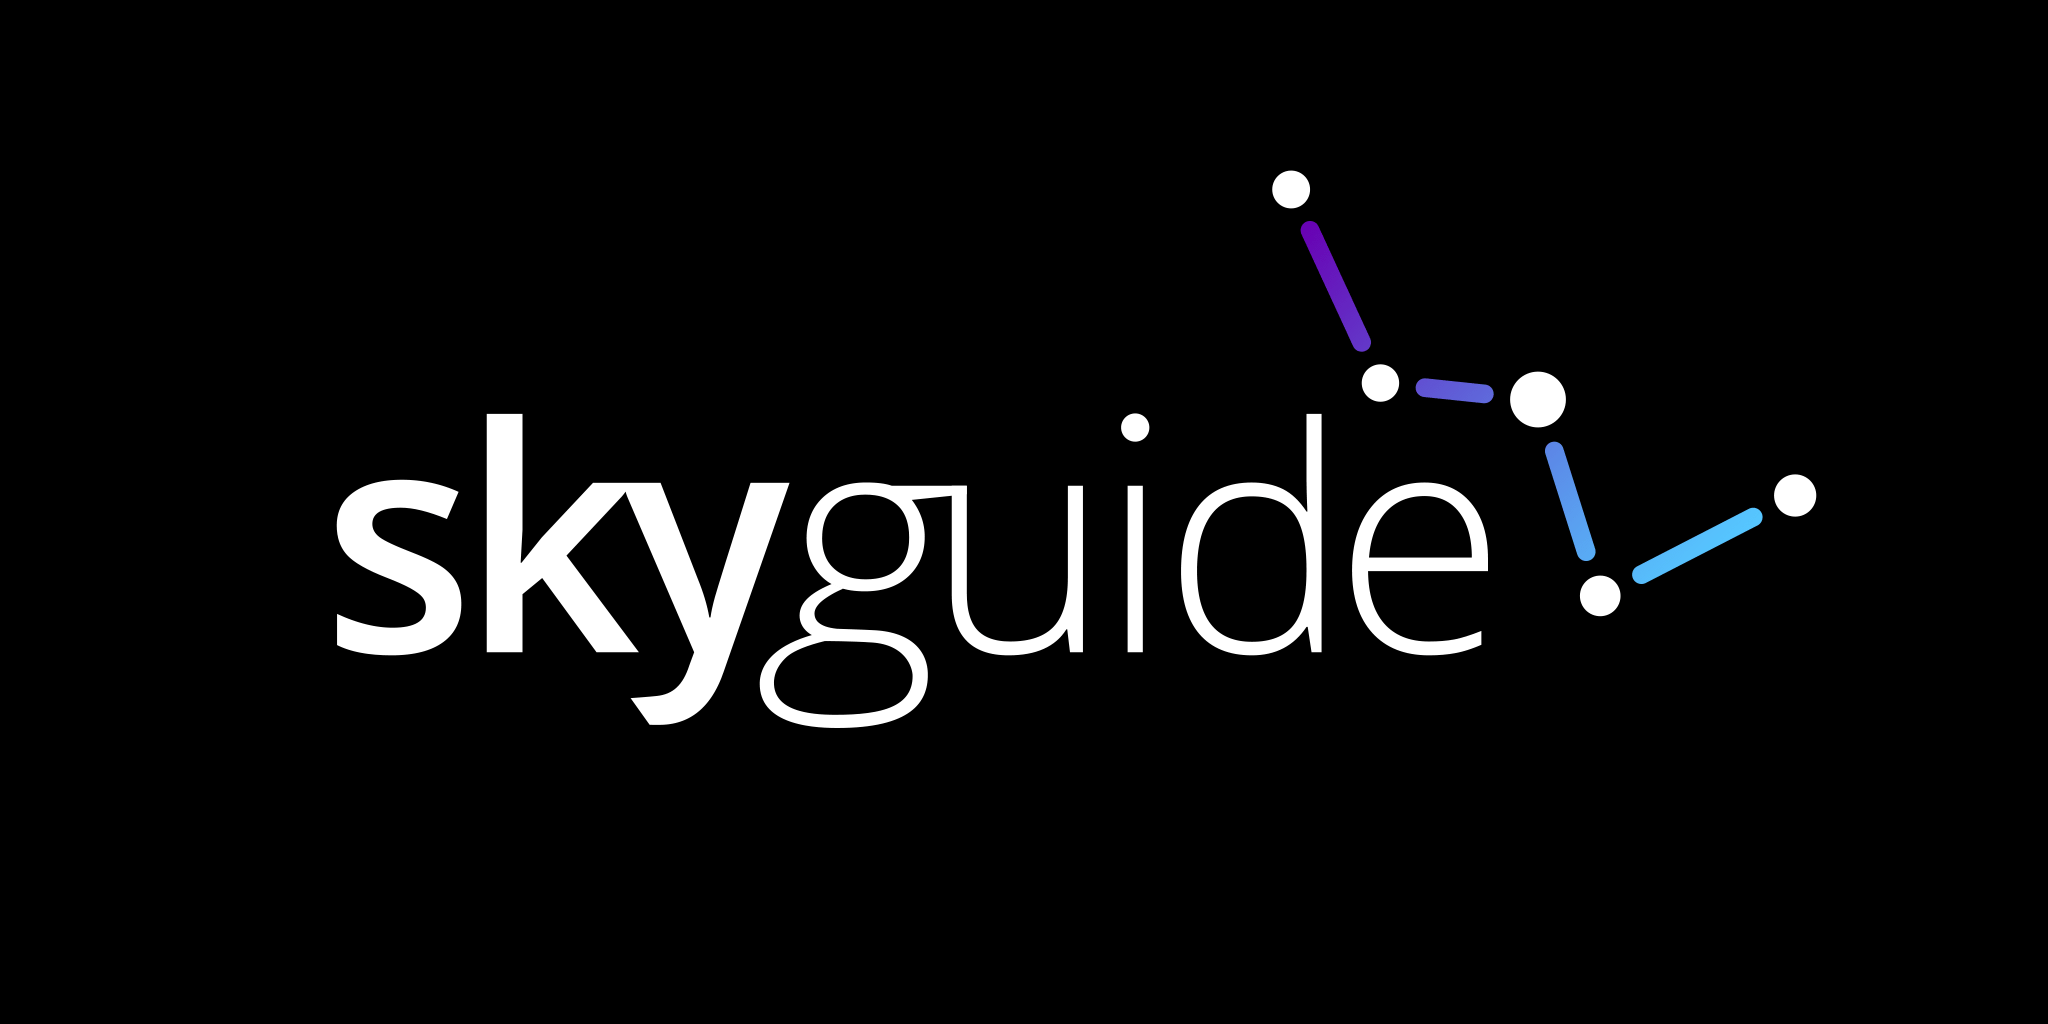 Sky Guide: звёздное небо в вашем кармане